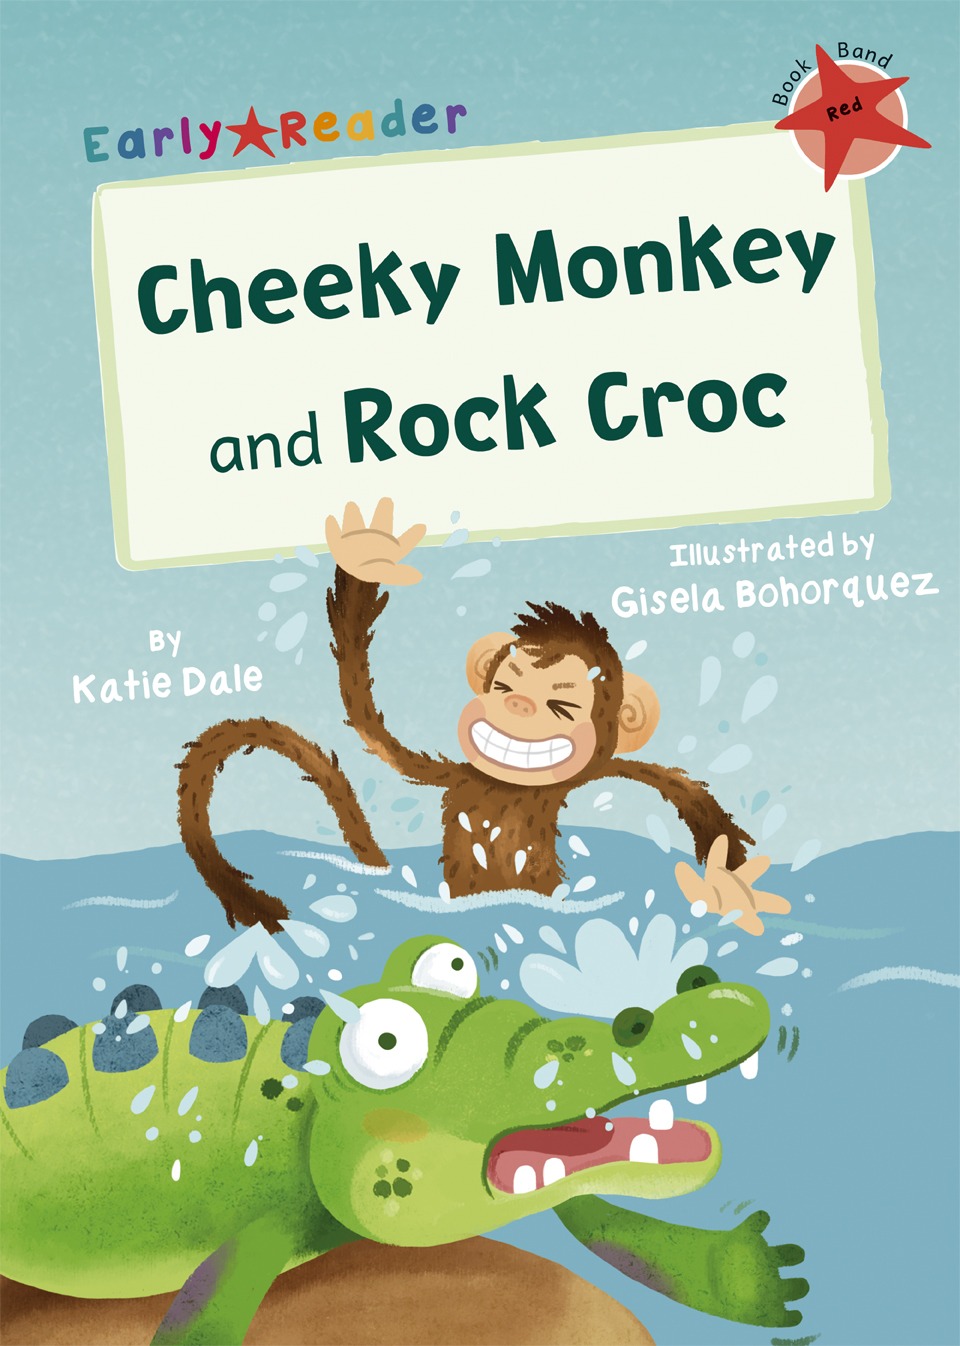 Crocodiles rock - The Mum Blog